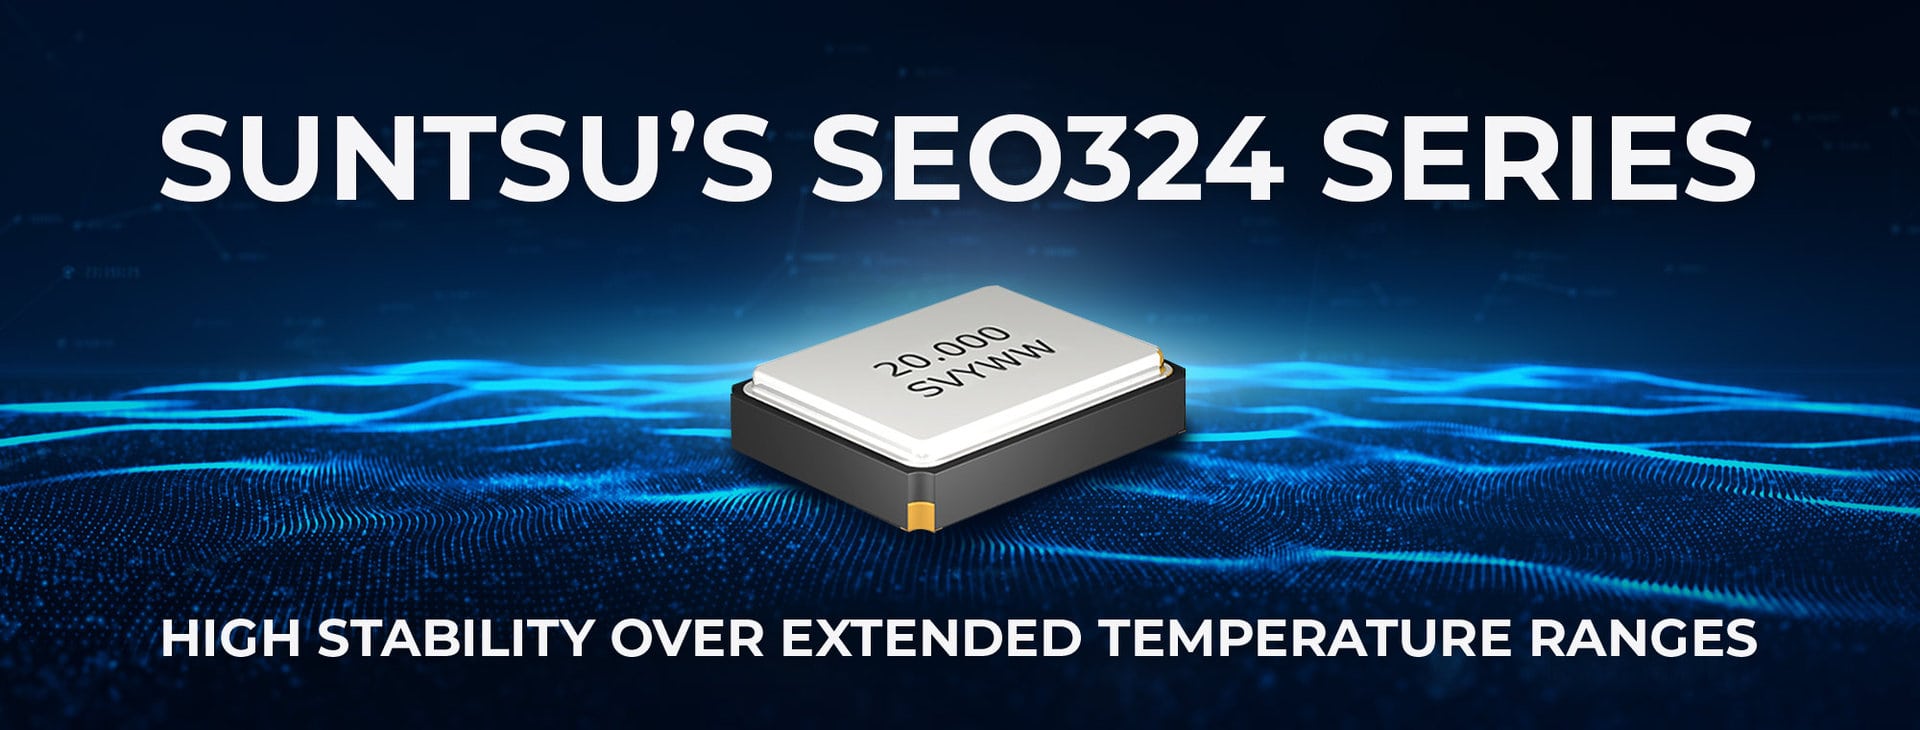 Suntsu’s GT-Cut Oscillator Offers High Stability Over Extended Temperature Ranges